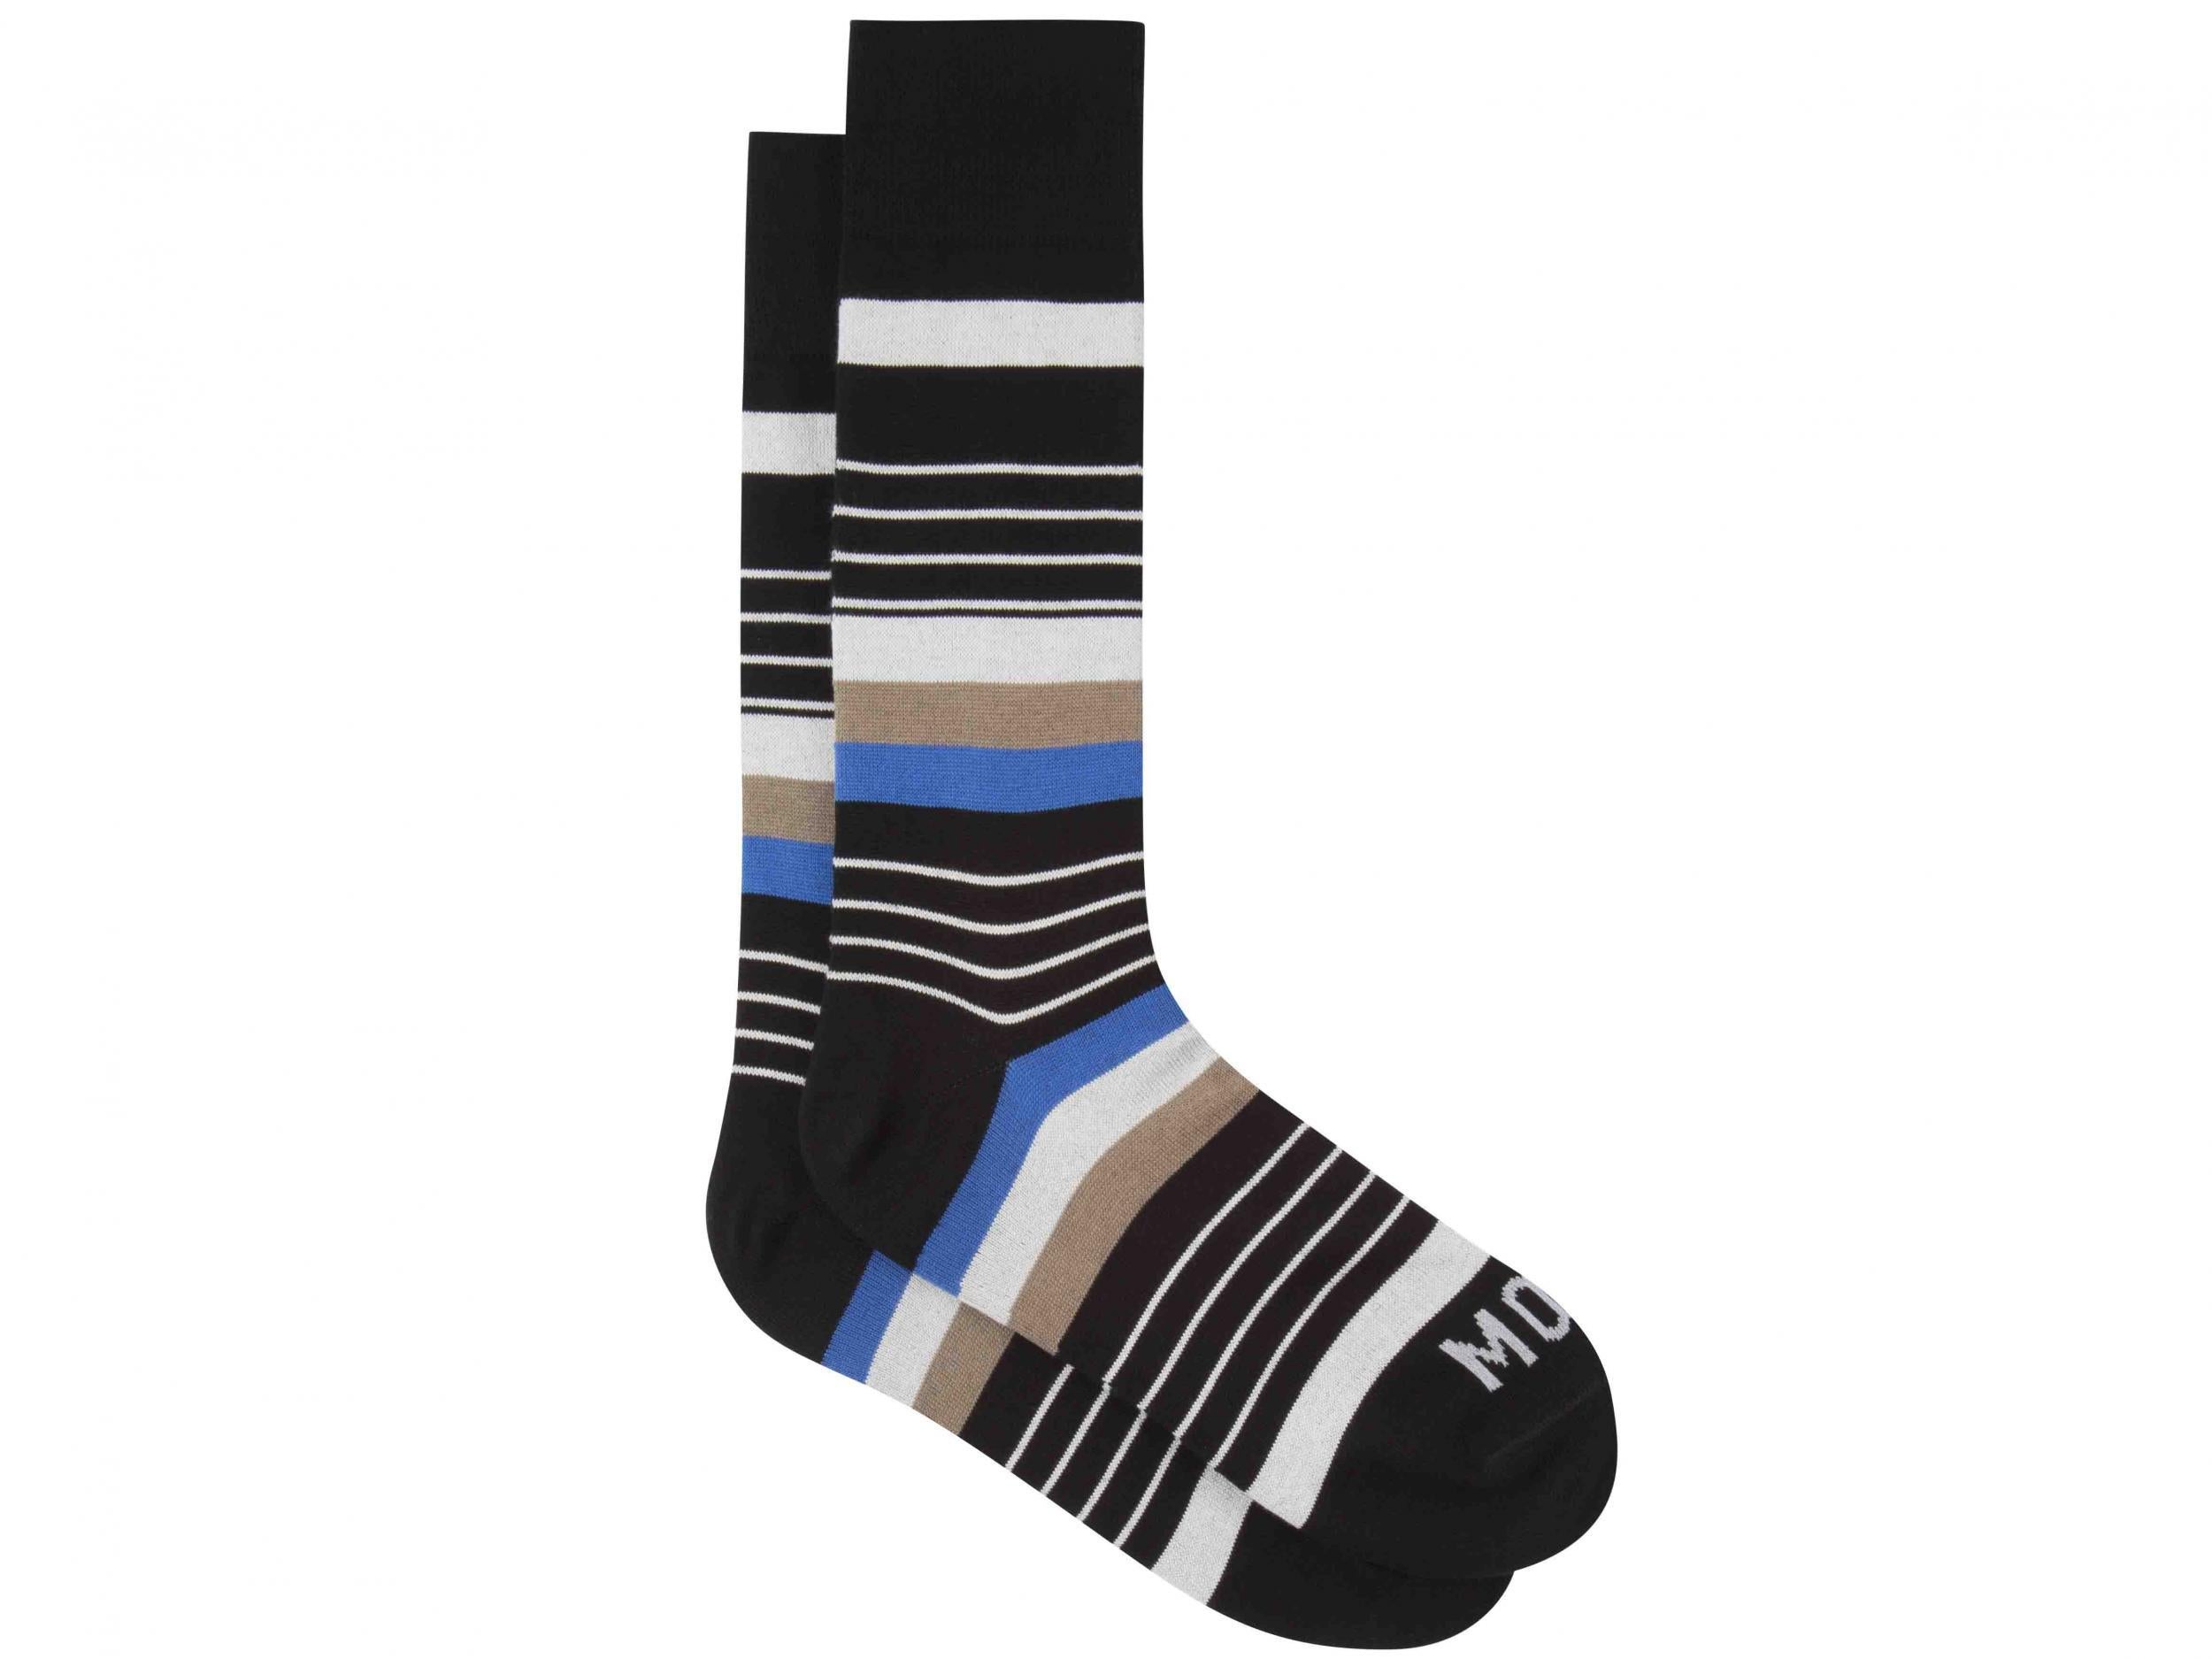 REM Sock, £19